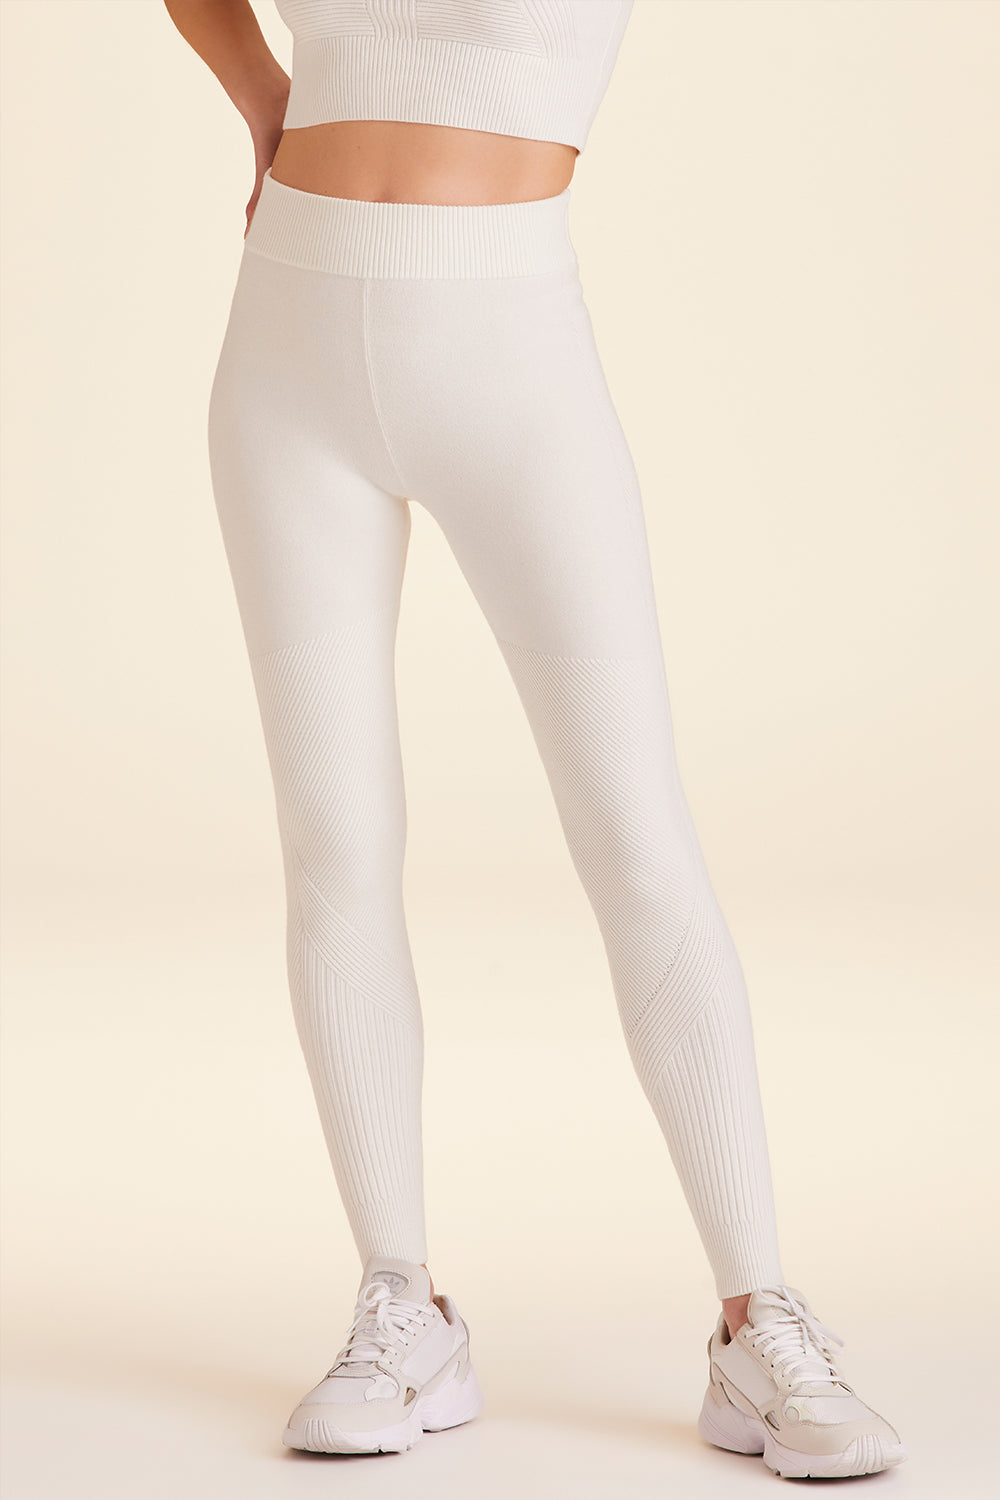 Goddess Cashmere Tight - White Cashmere Leggings